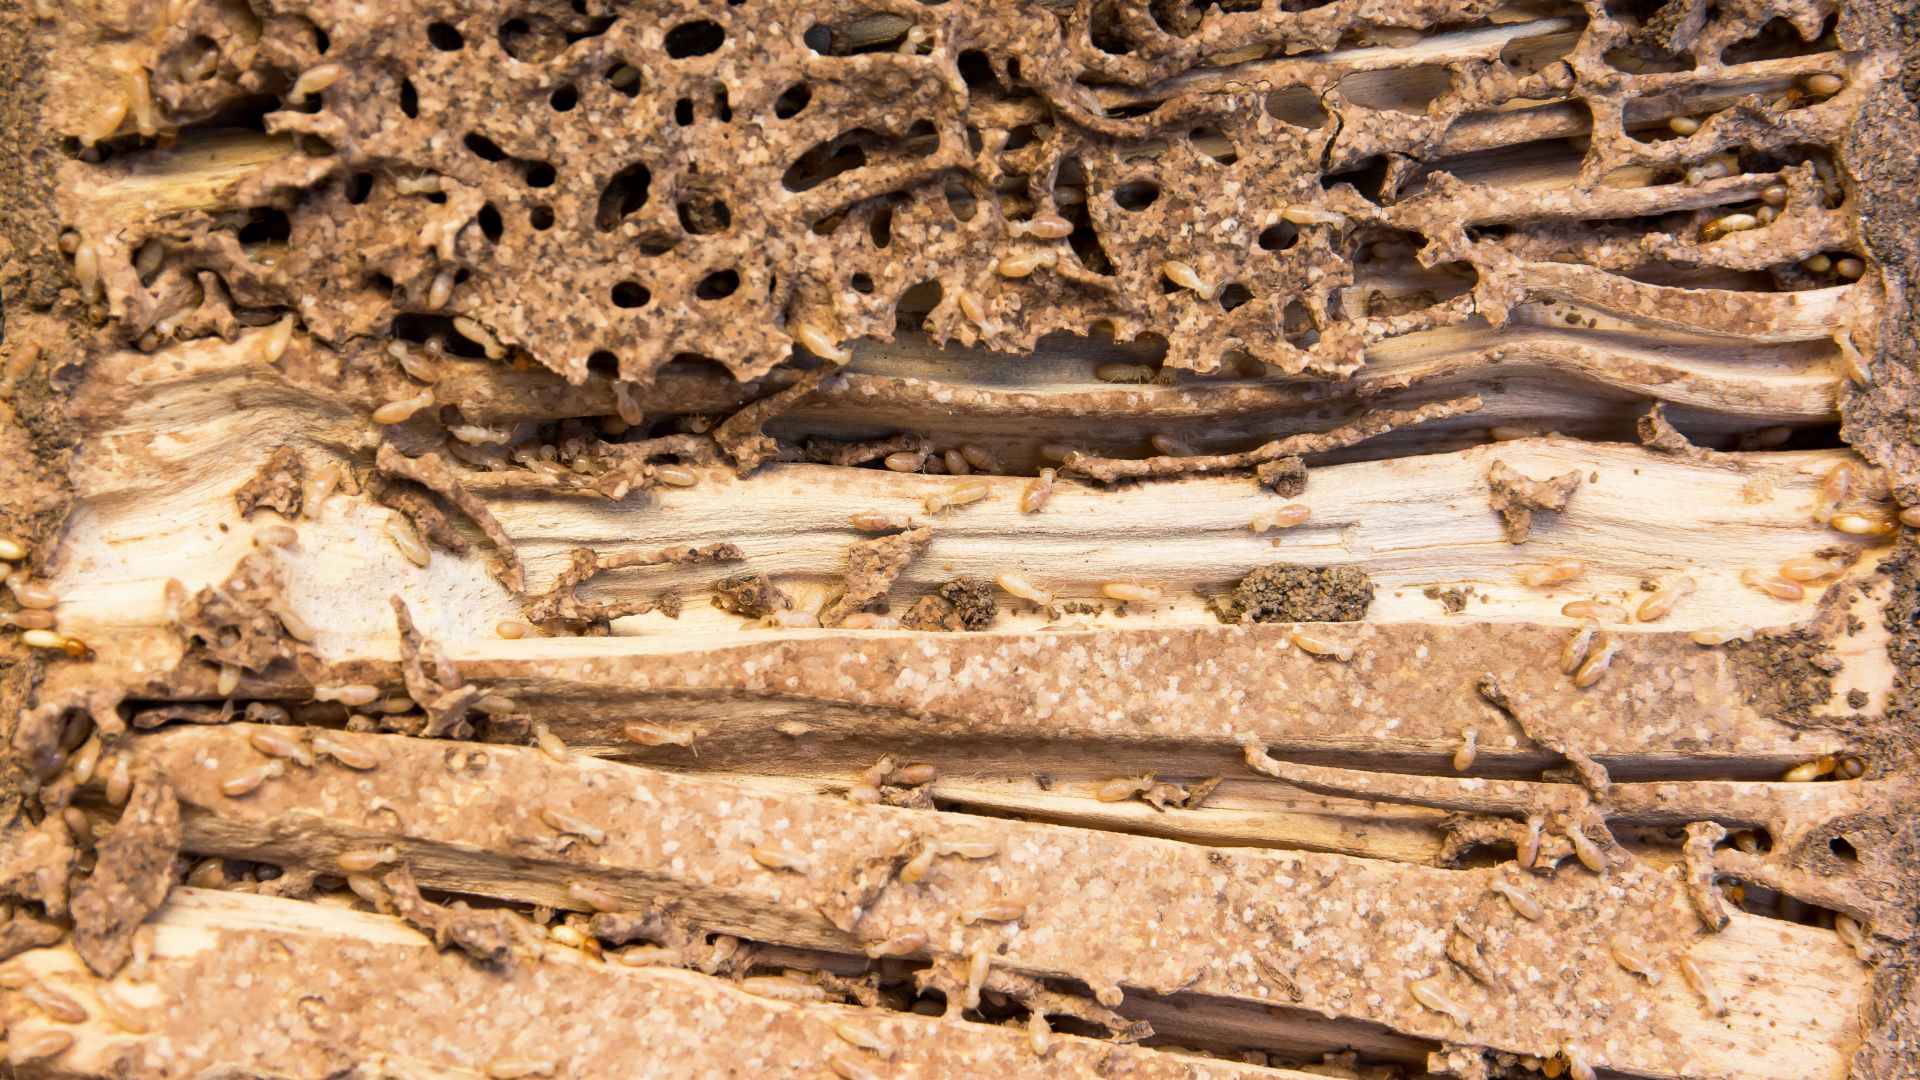 Termites in Hardwood Floors: DIY Fix or Call a Pro?